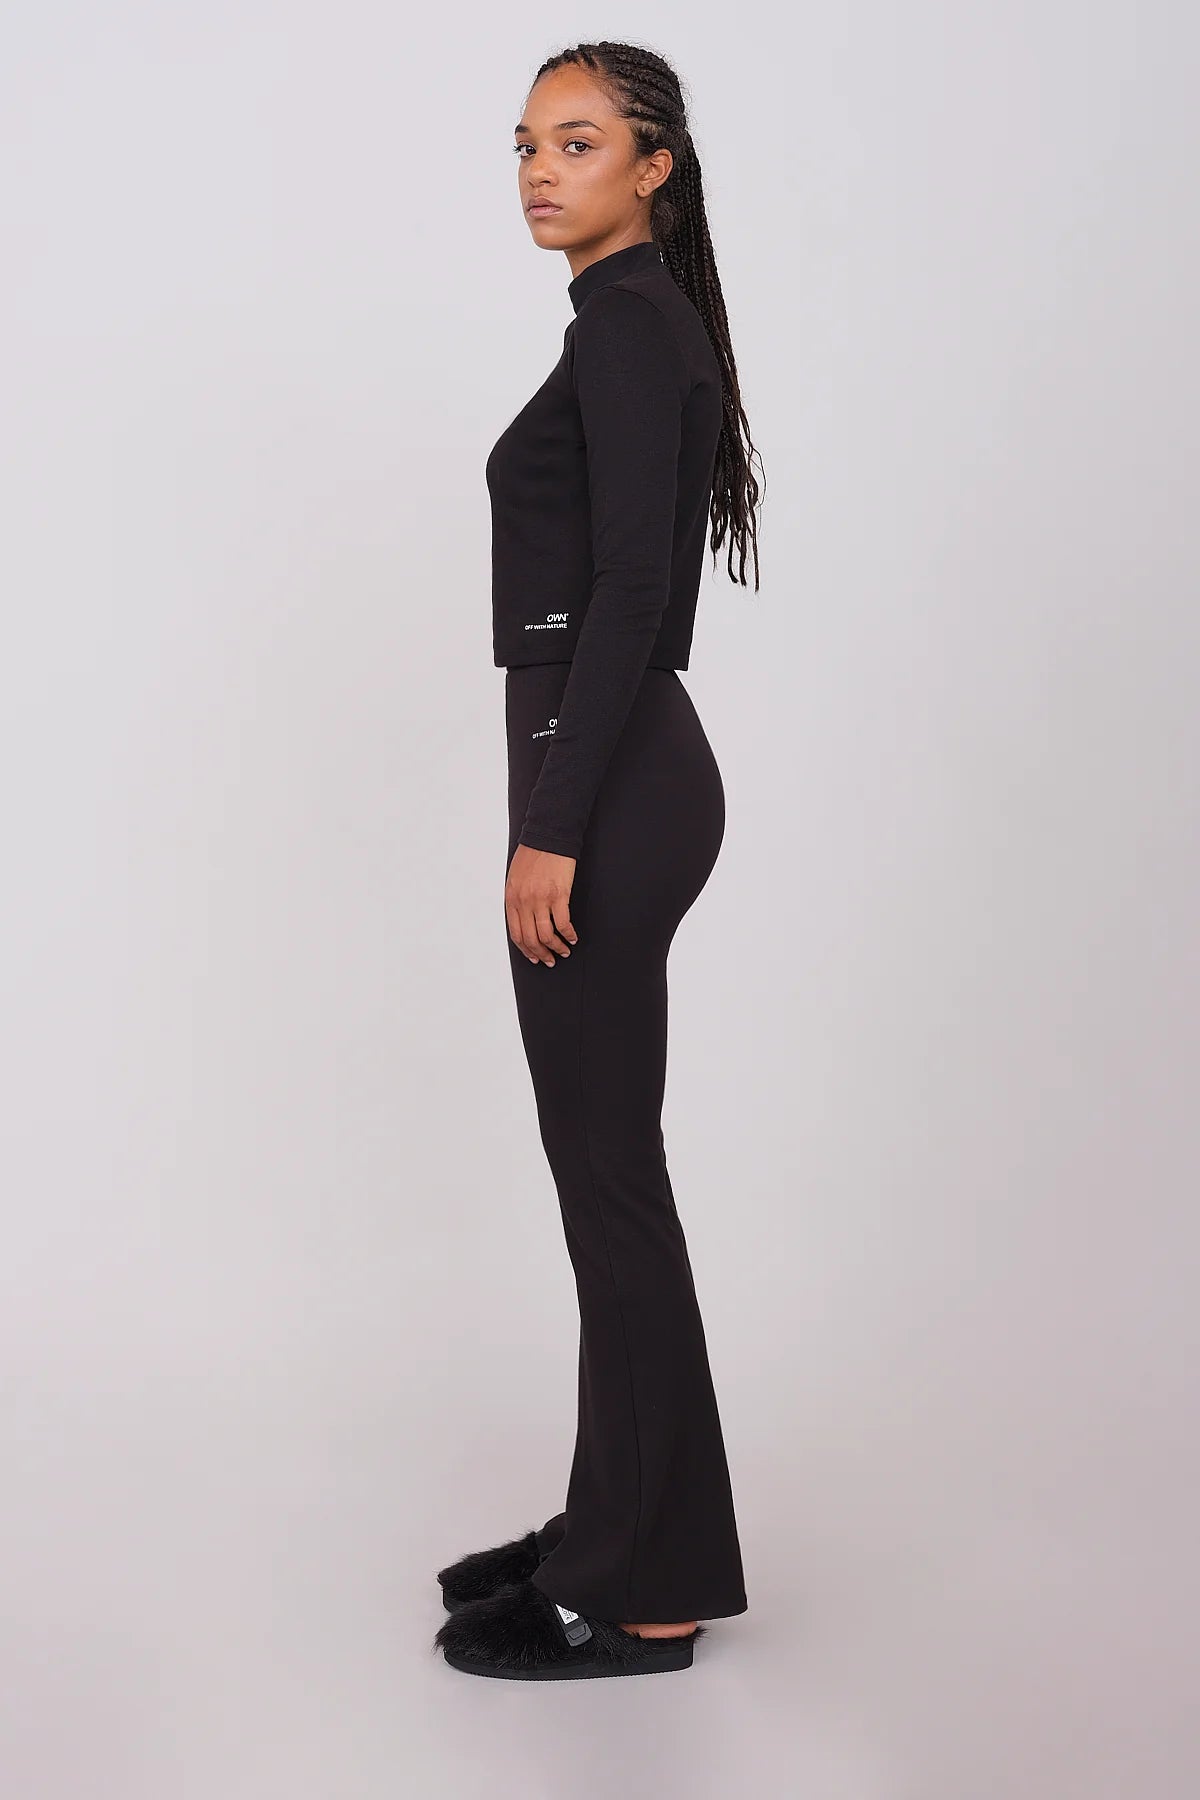 Studio 7 Adult's Long Jazz Pants - Black – Ditto Dancewear